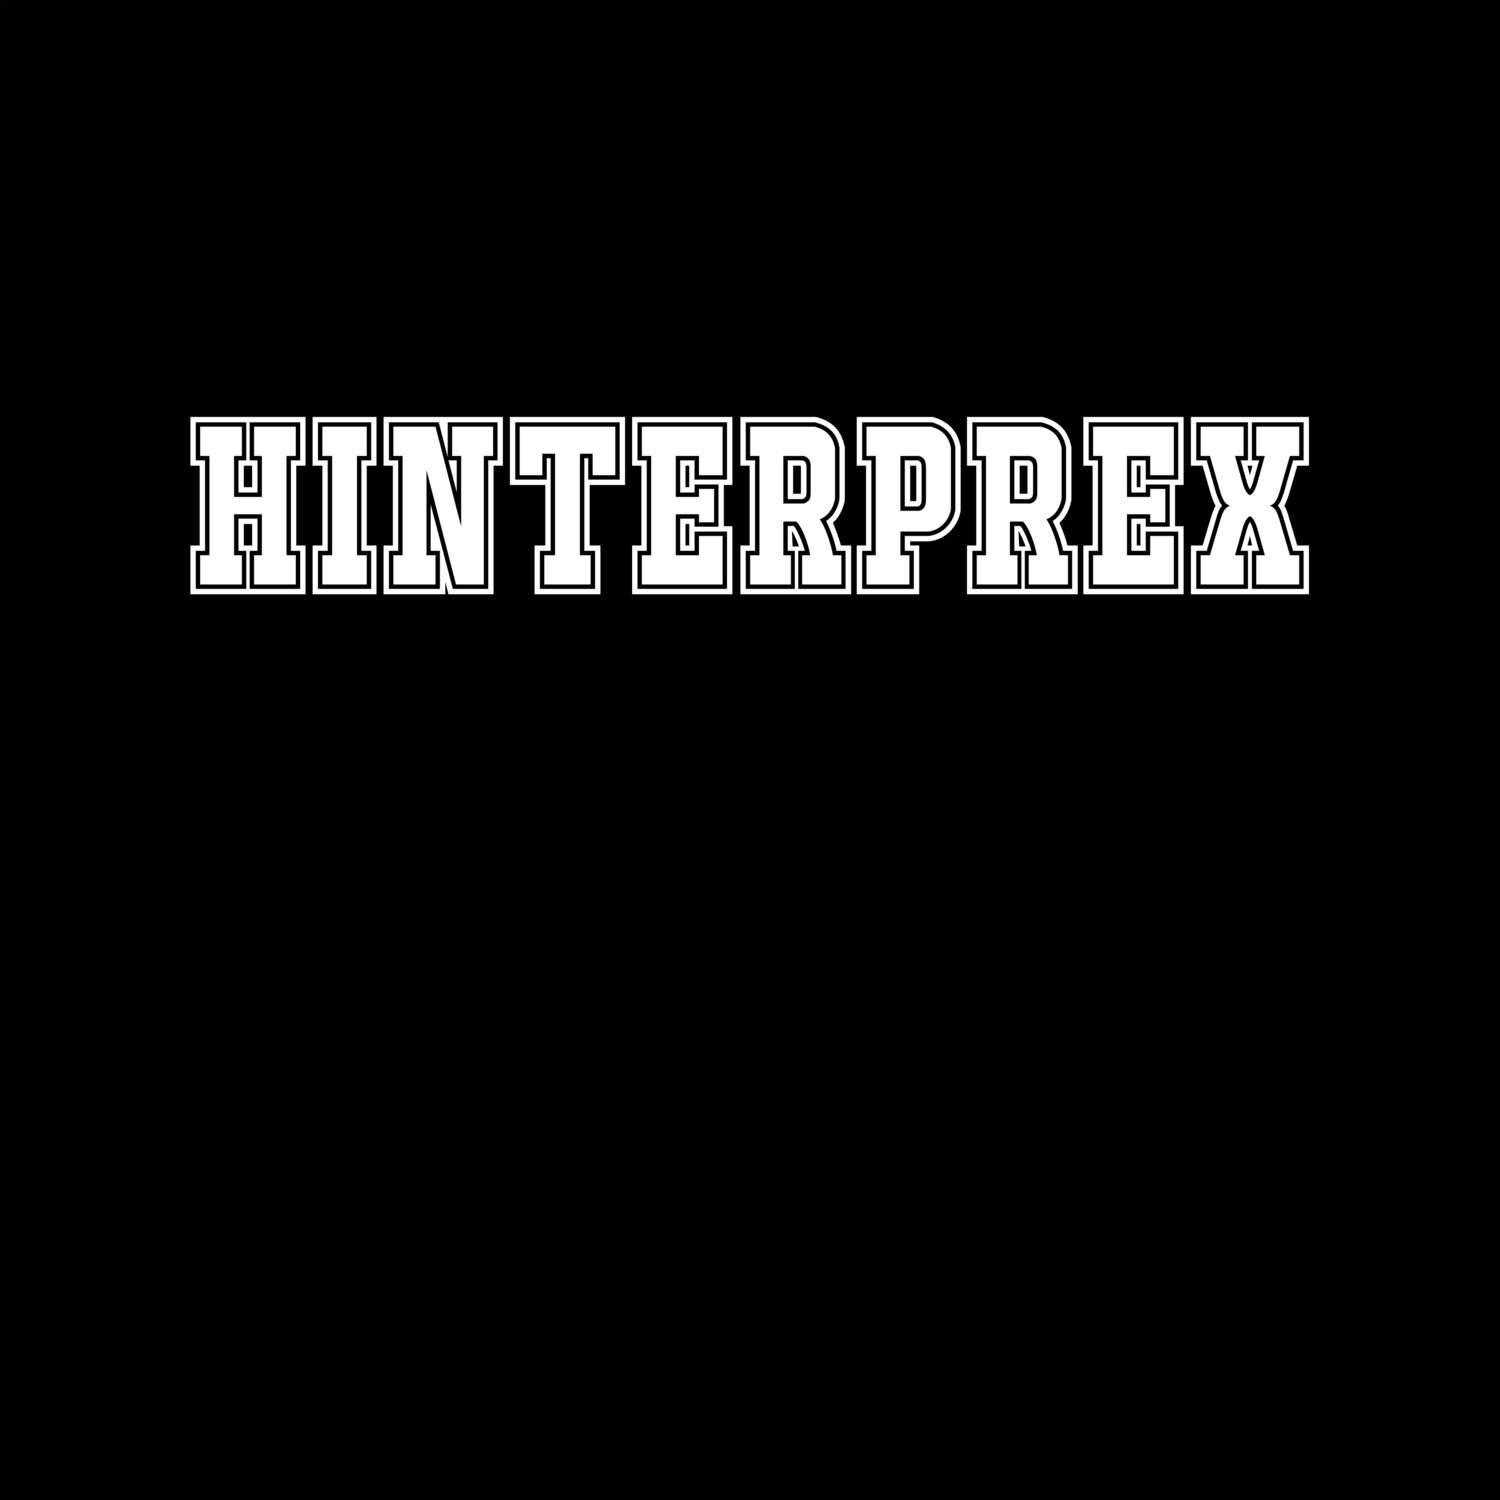 Hinterprex T-Shirt »Classic«